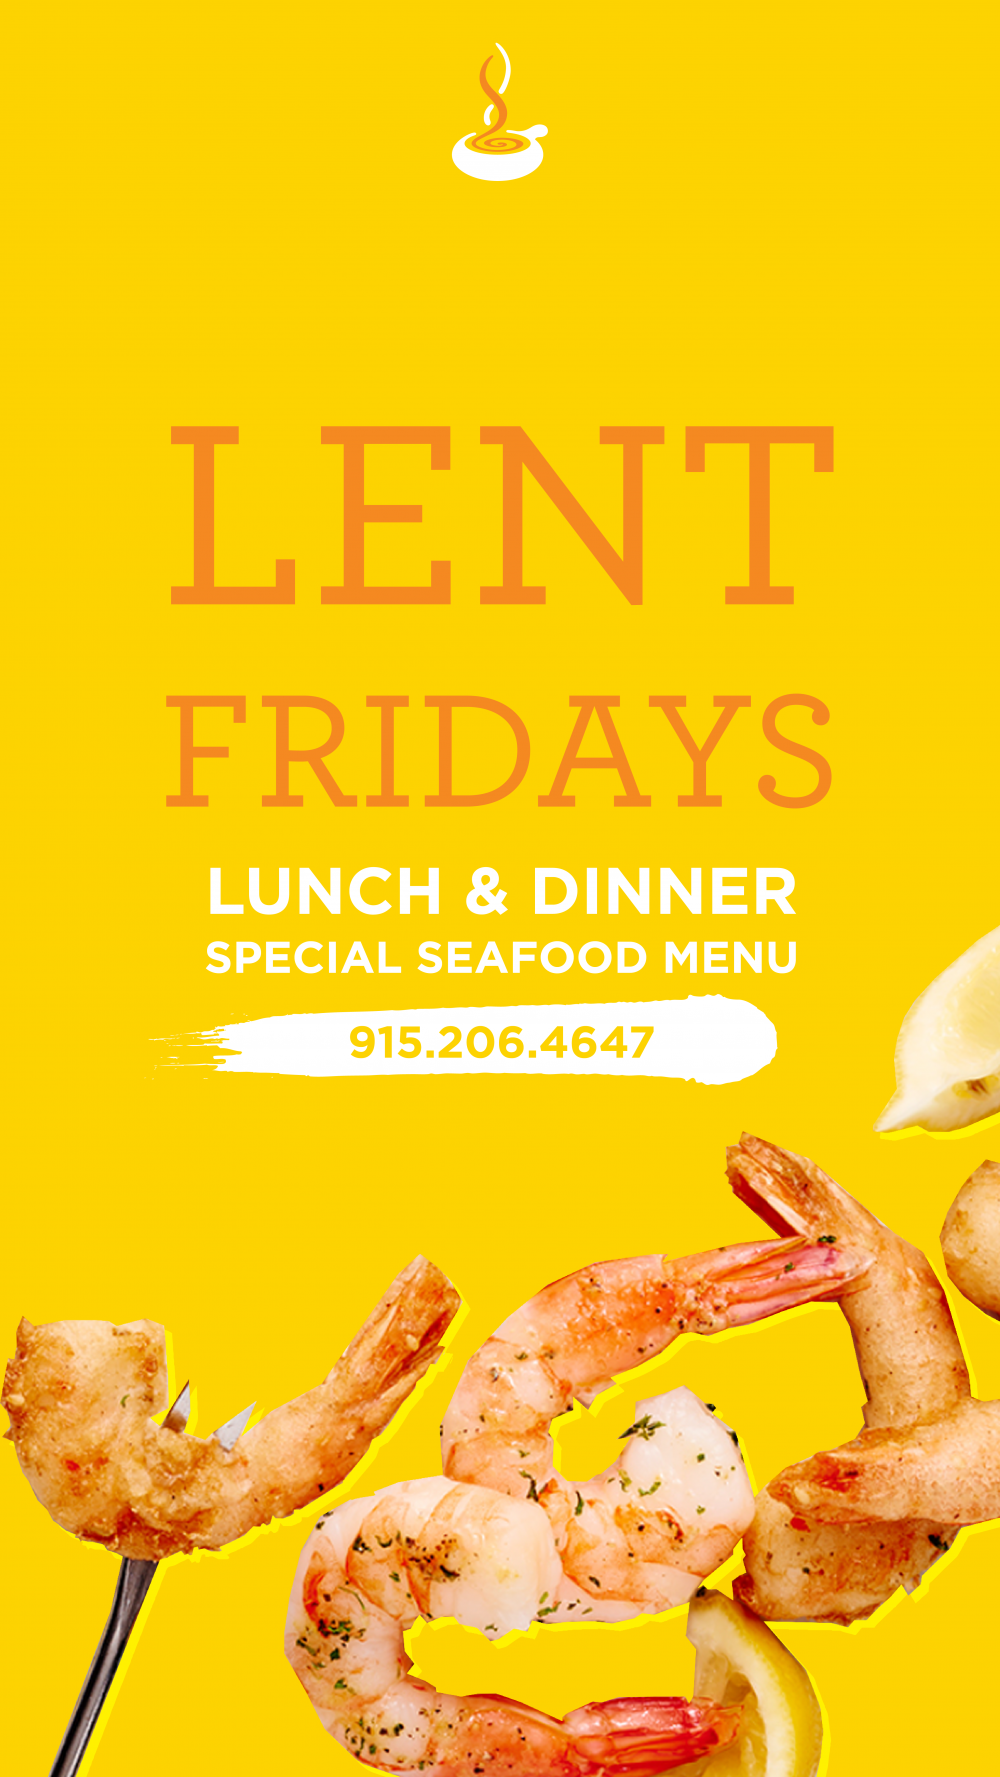 Lent Fridays at The Melting Pot